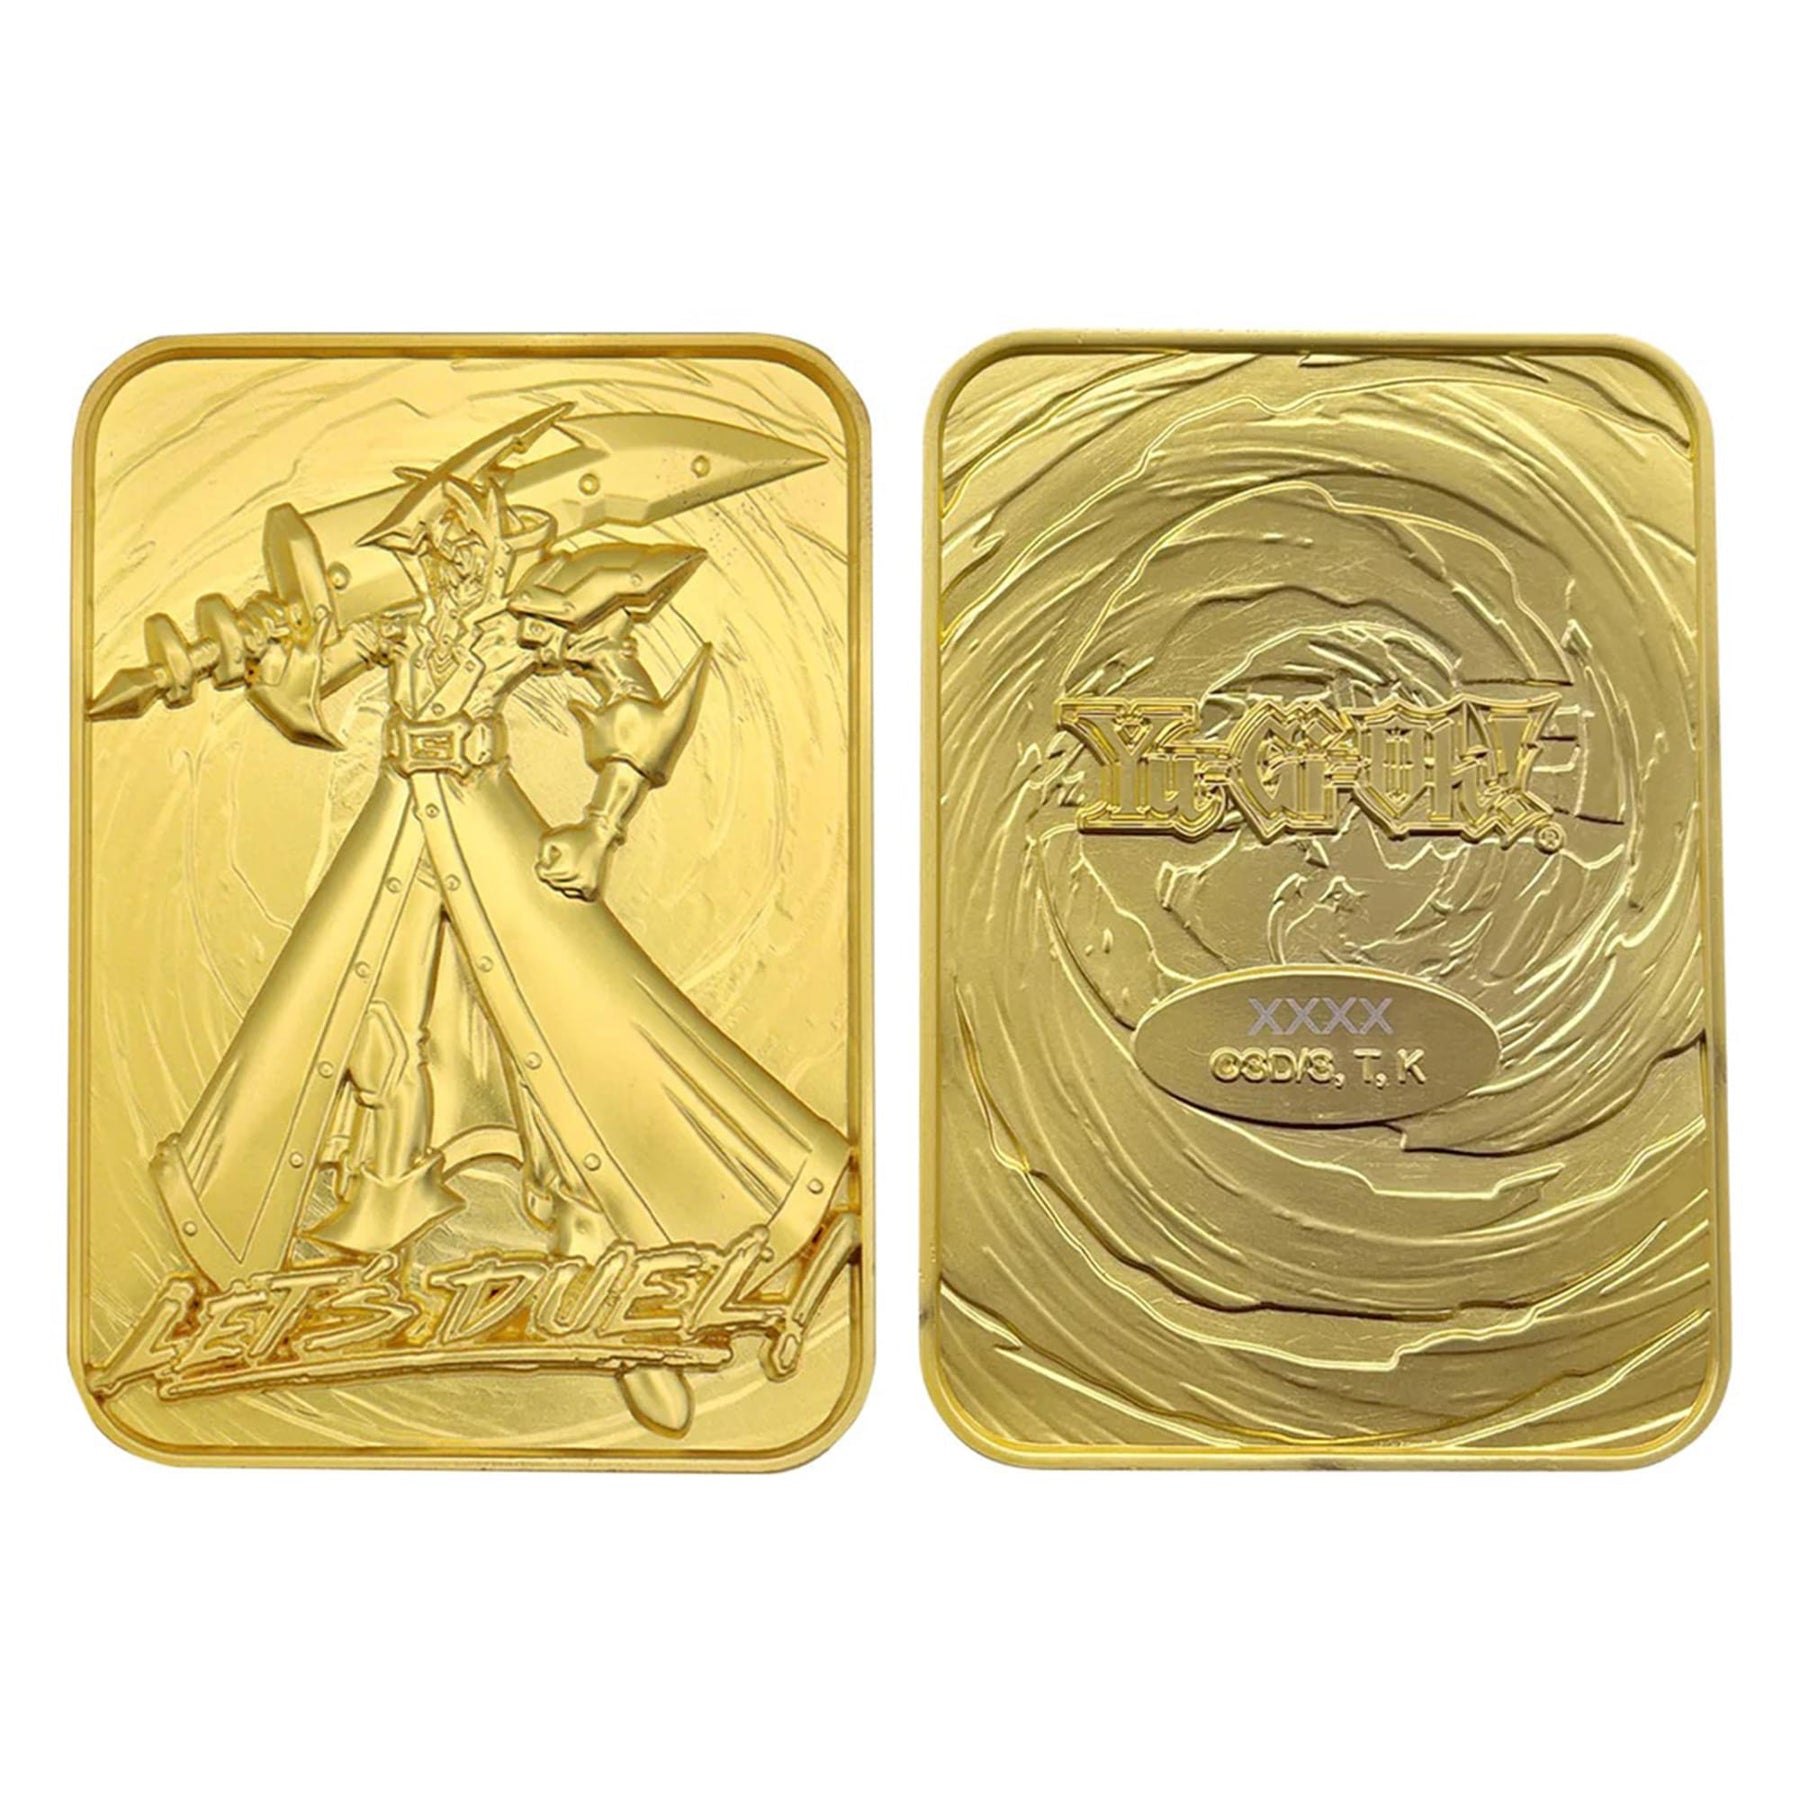 Yu-Gi-Oh! Limited Edition 24k Gold Plated Metal Card | Silent Swordsman